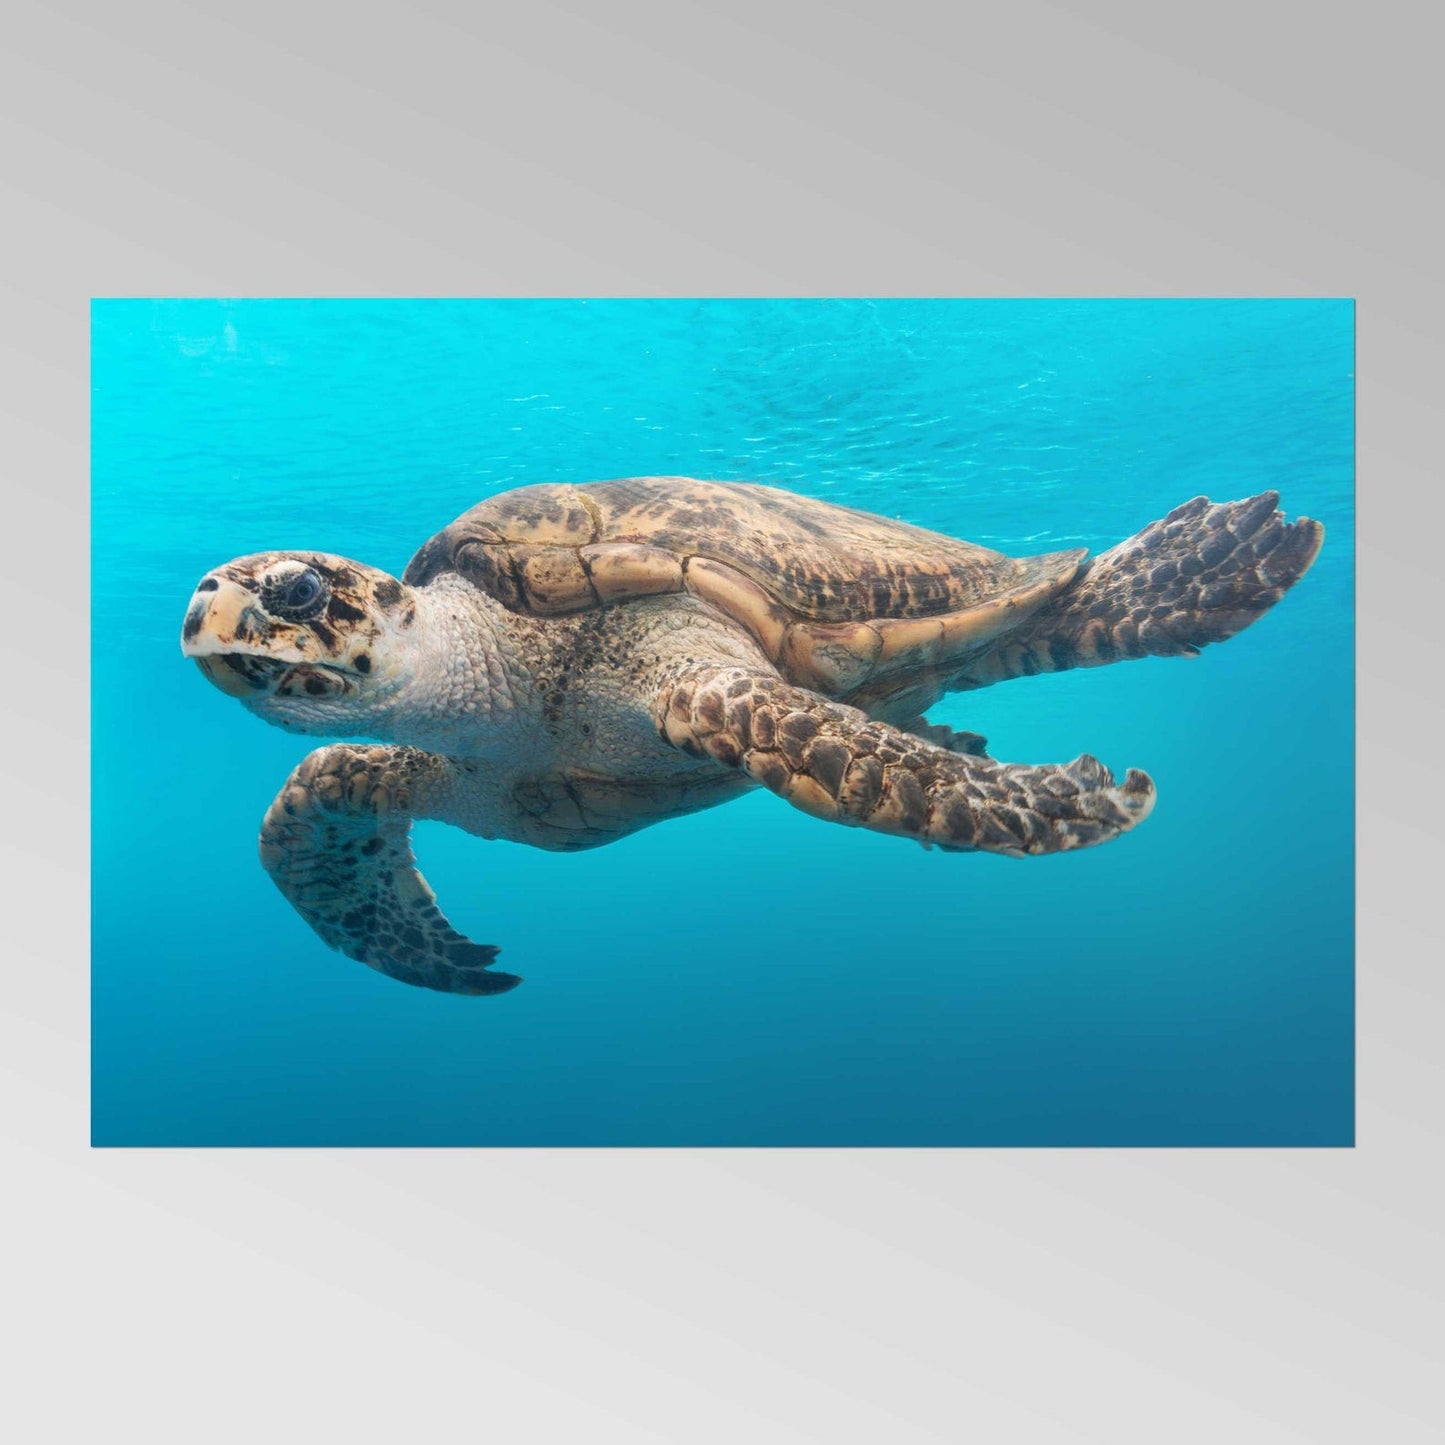 CAROL M. HIGHSMITH - A Turtle Glides Through the Water